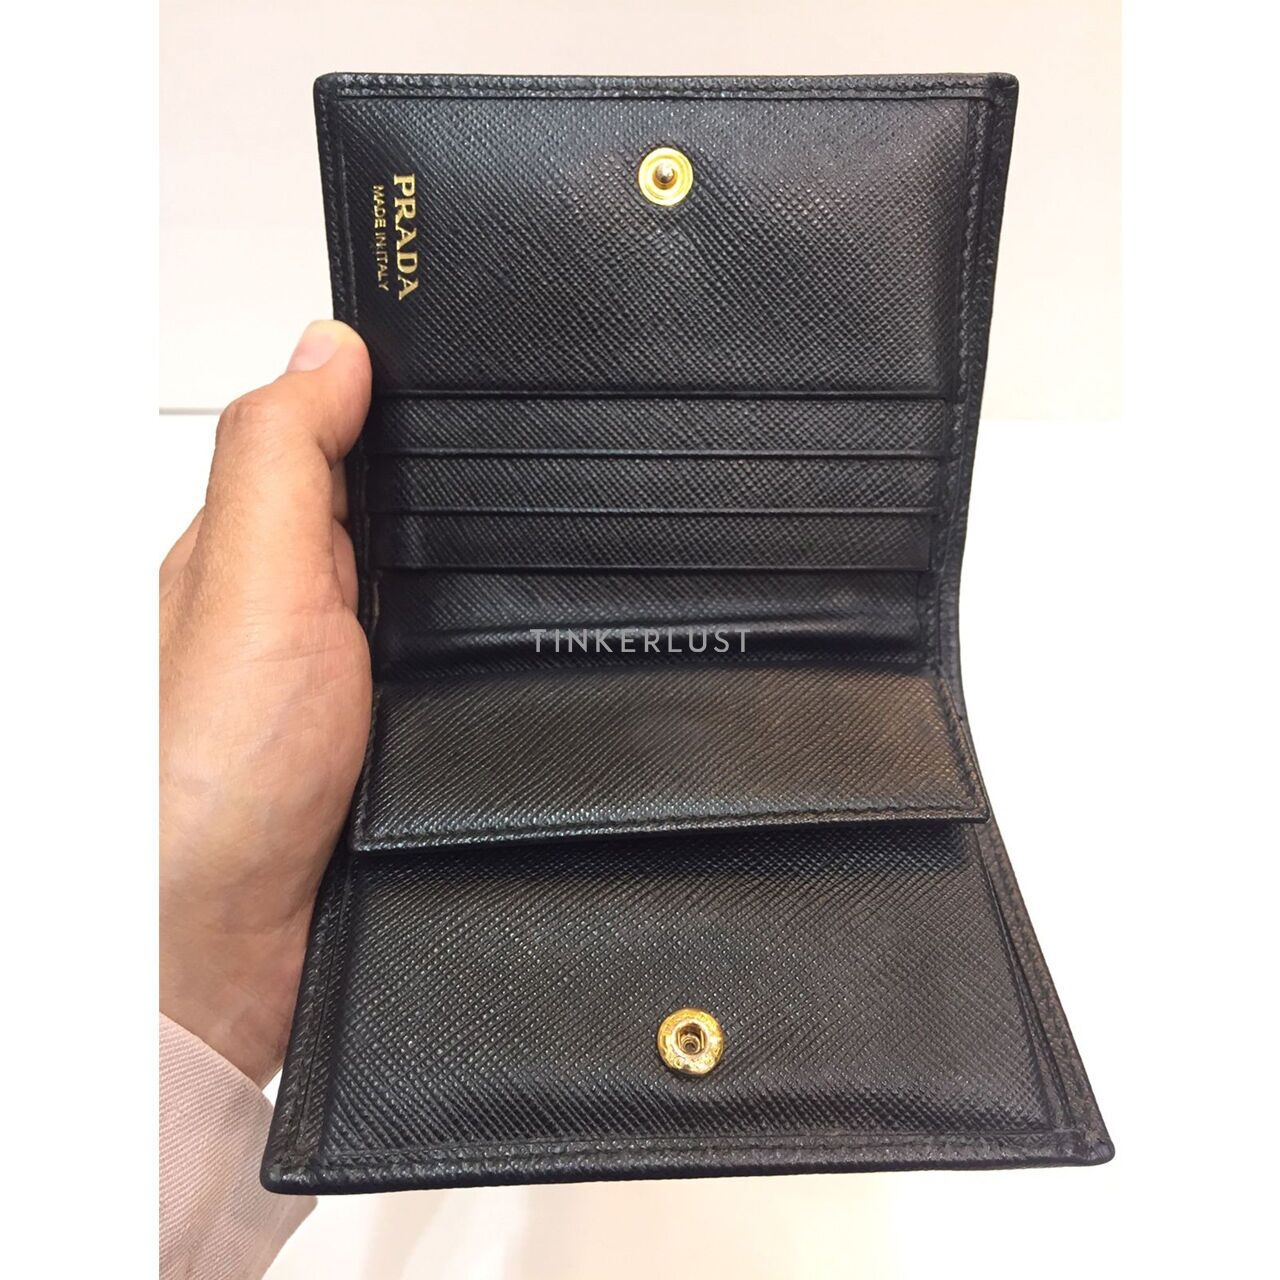 Prada Saffiano Leather Black Compact Wallet